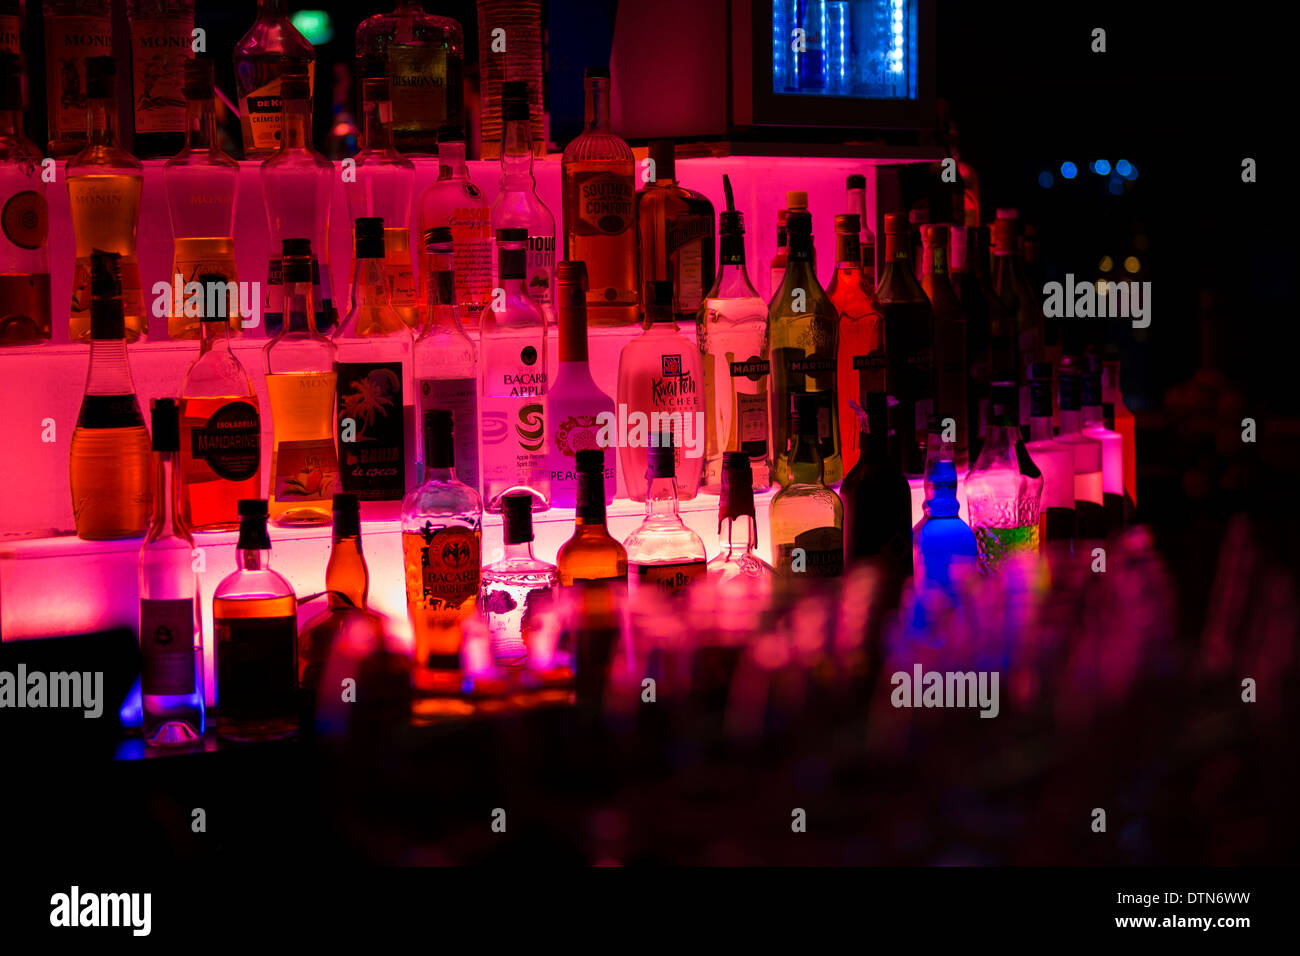 Night club alcohol bottles Stock Photo